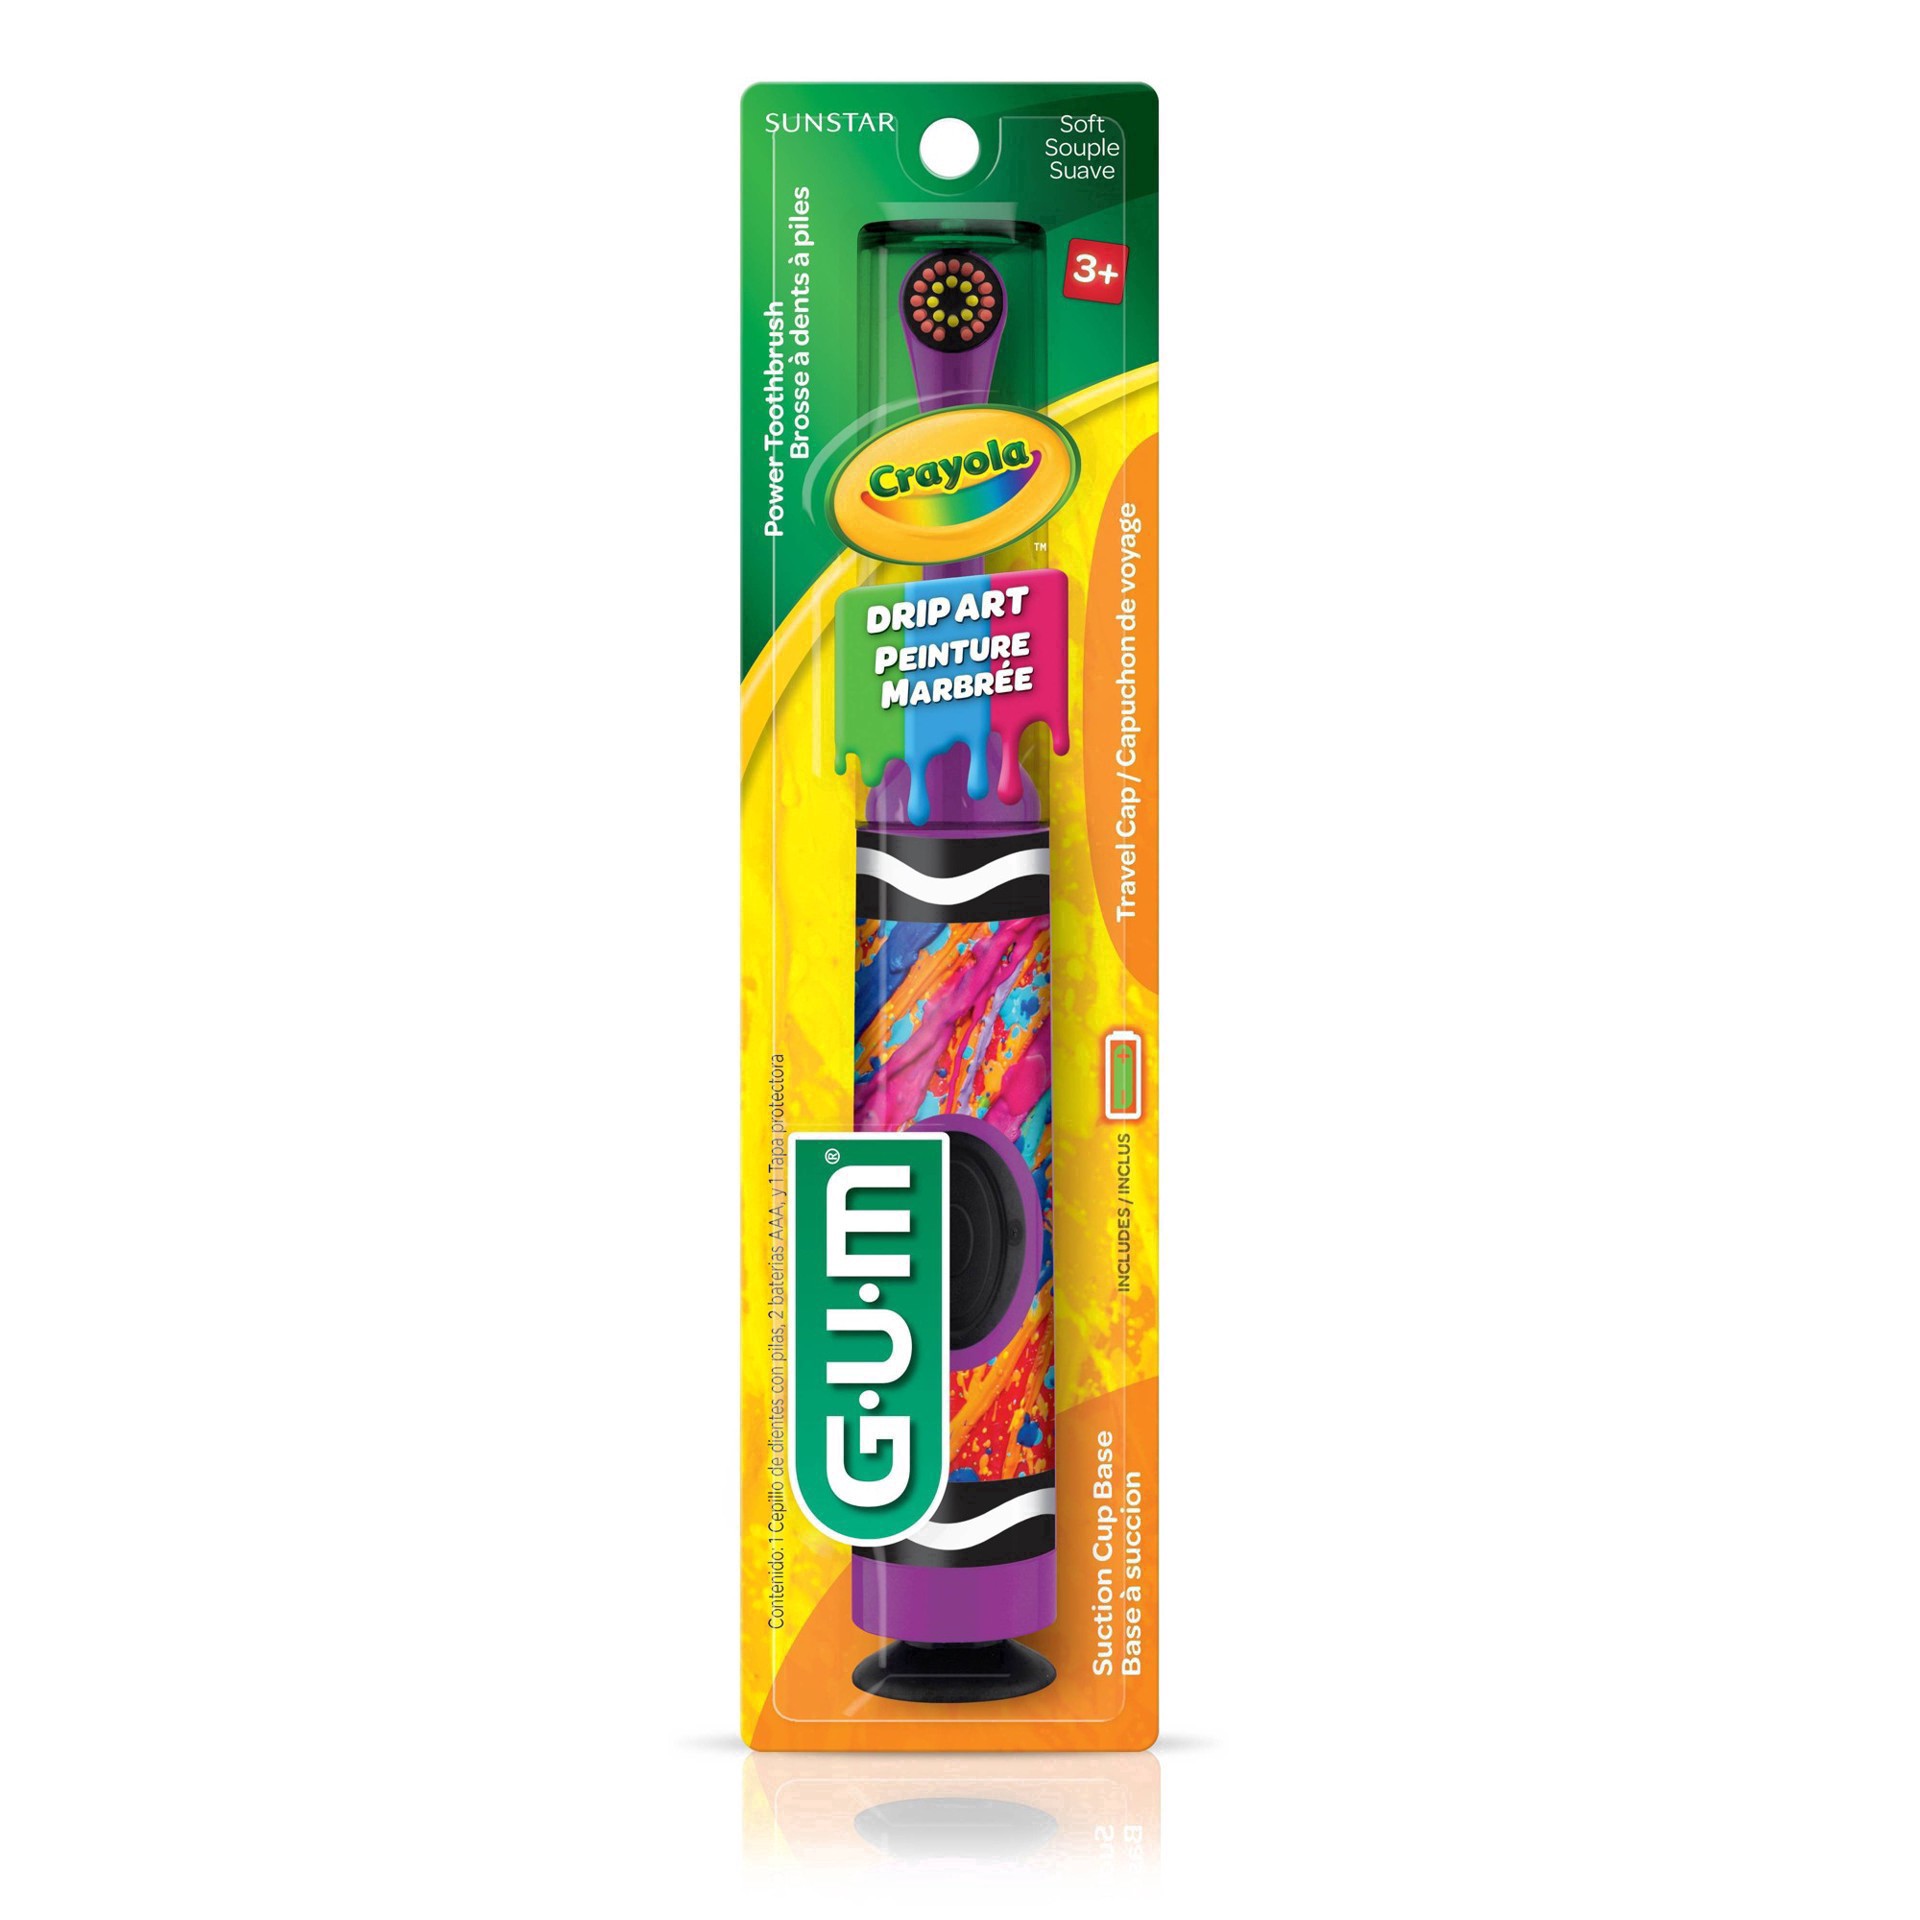 slide 43 of 50, G-U-M Crayola Electric Toothbrush, 1 ct